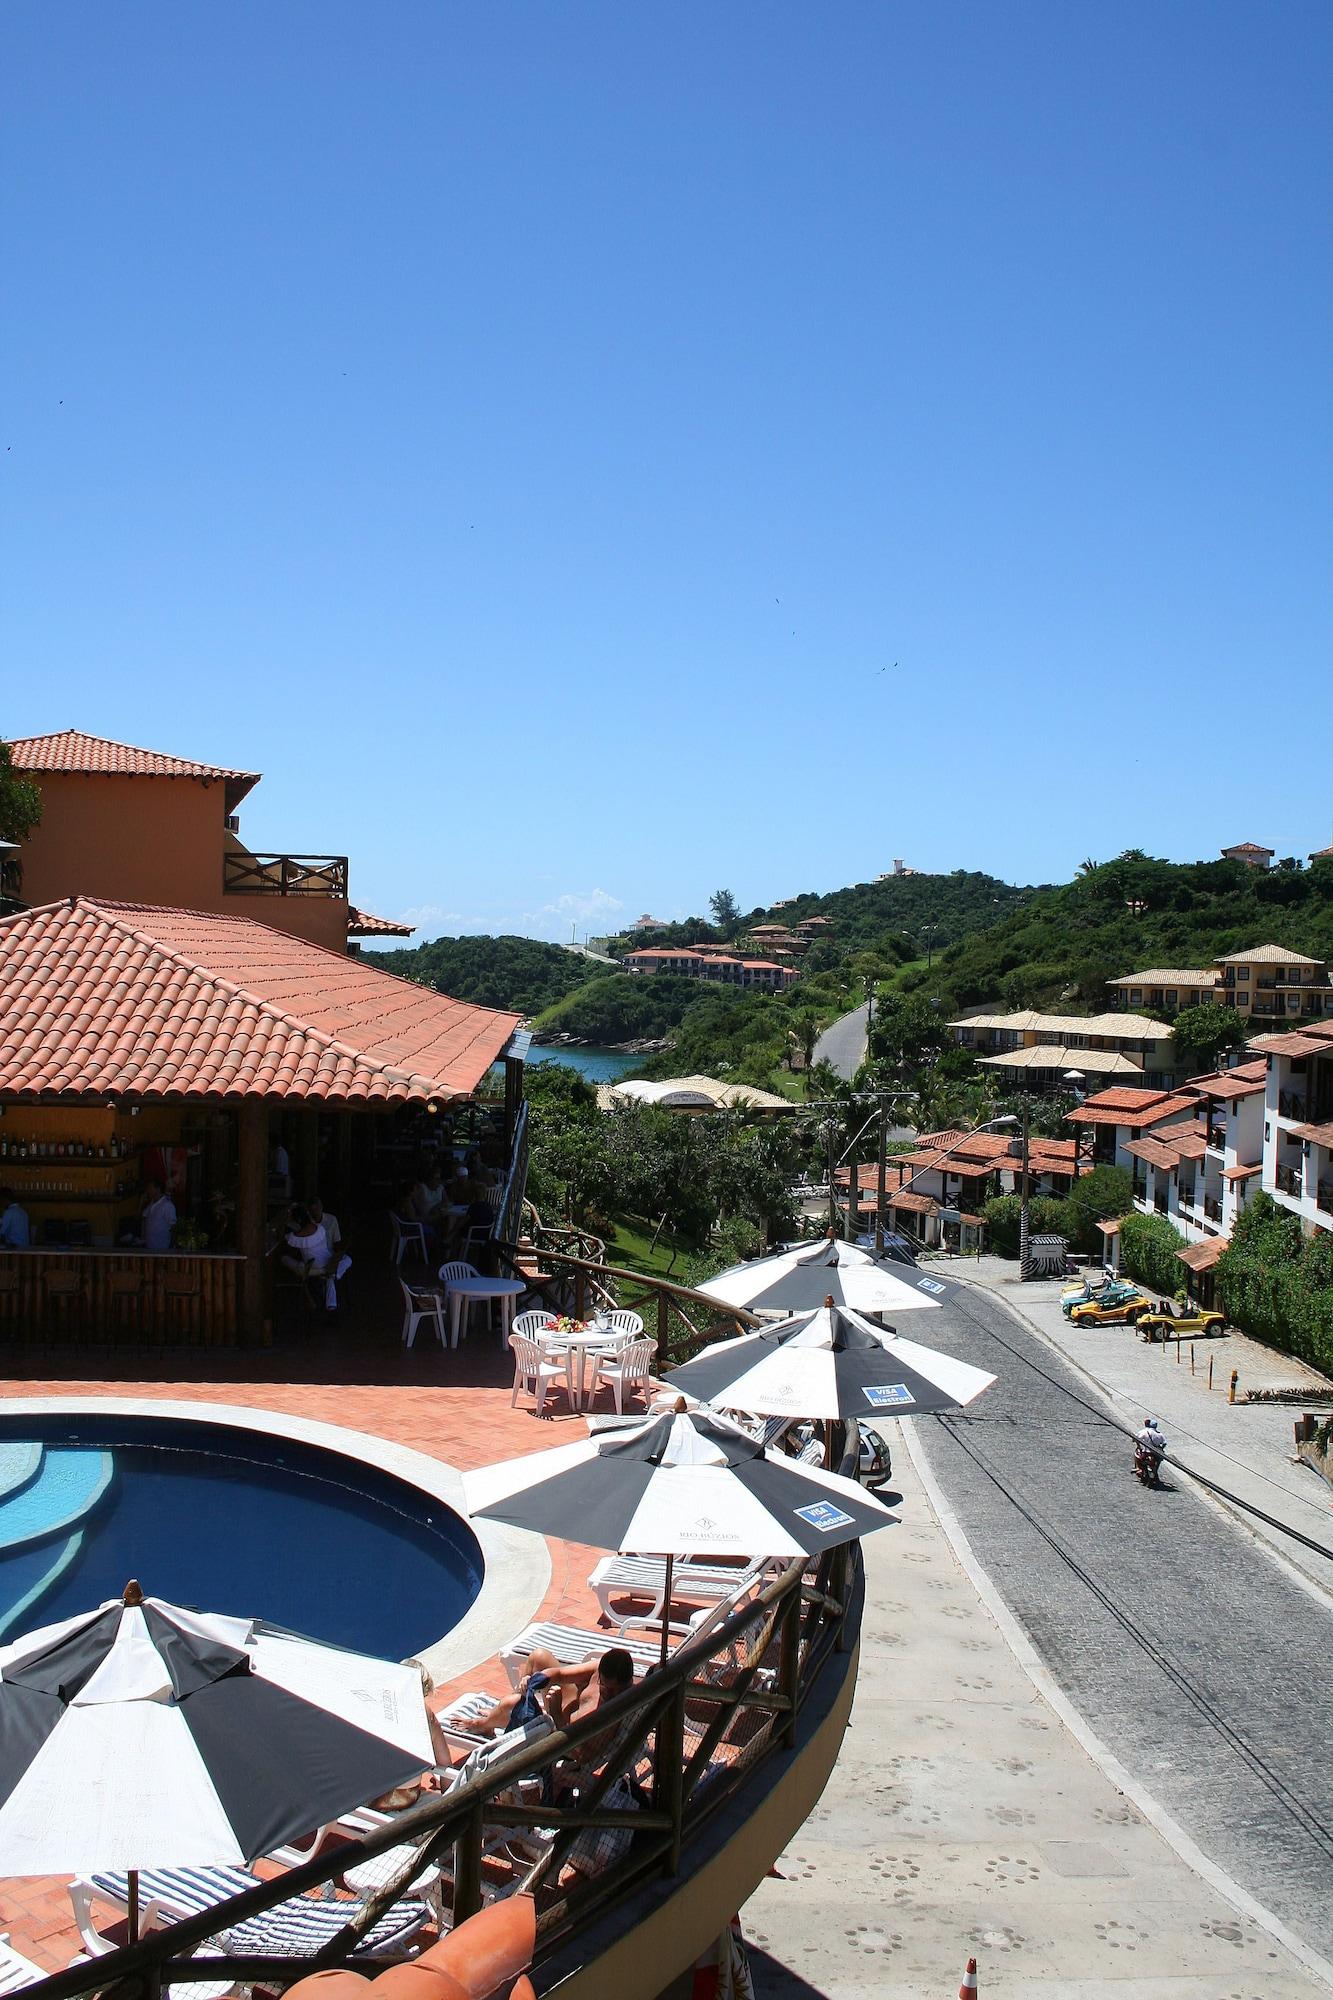 Rio Buzios Beach Hotel Exterior foto